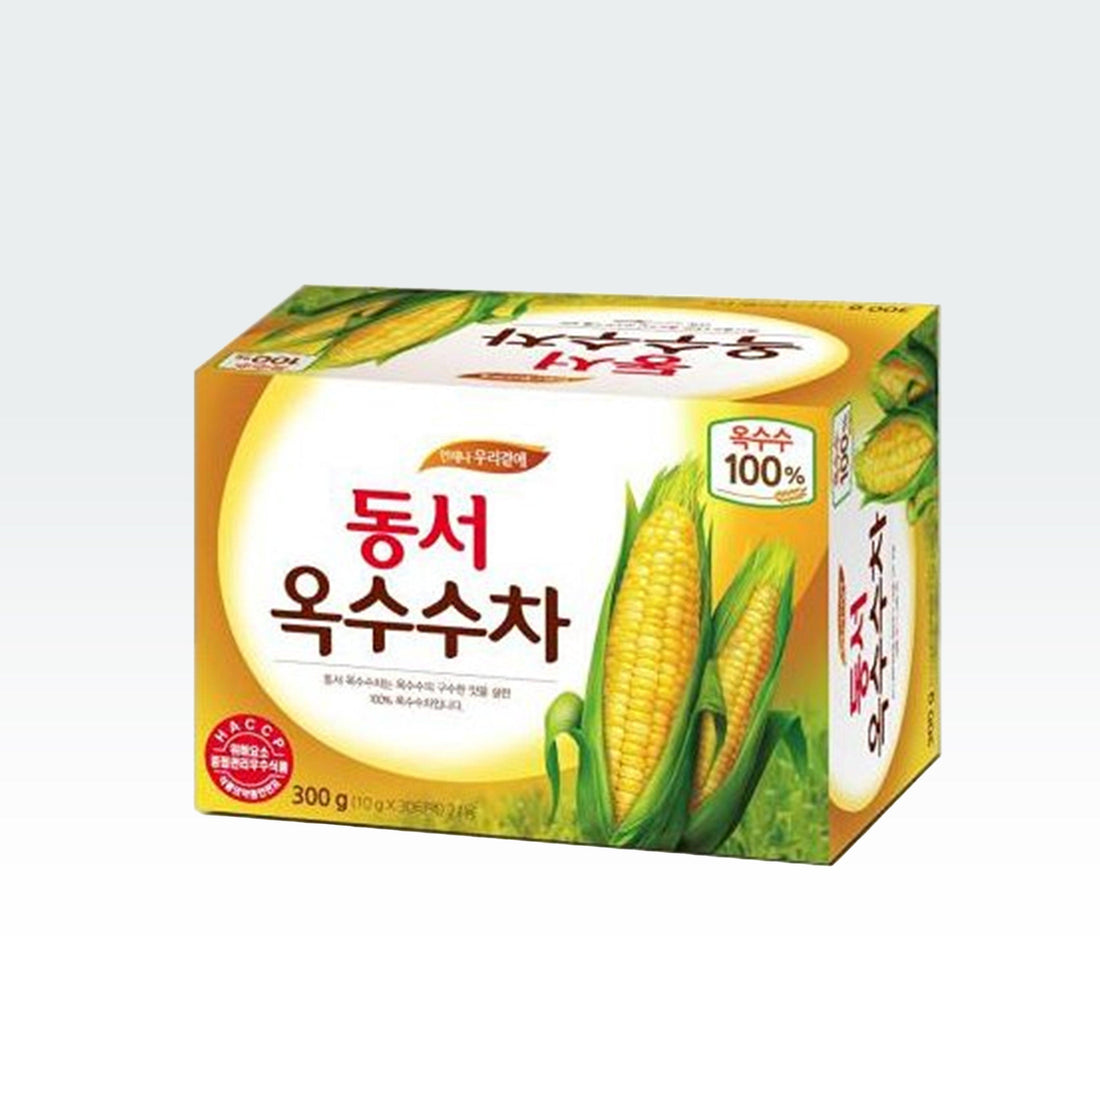 Dongsuh Corn Tea 300g(10g x 30T) - Anytime Basket